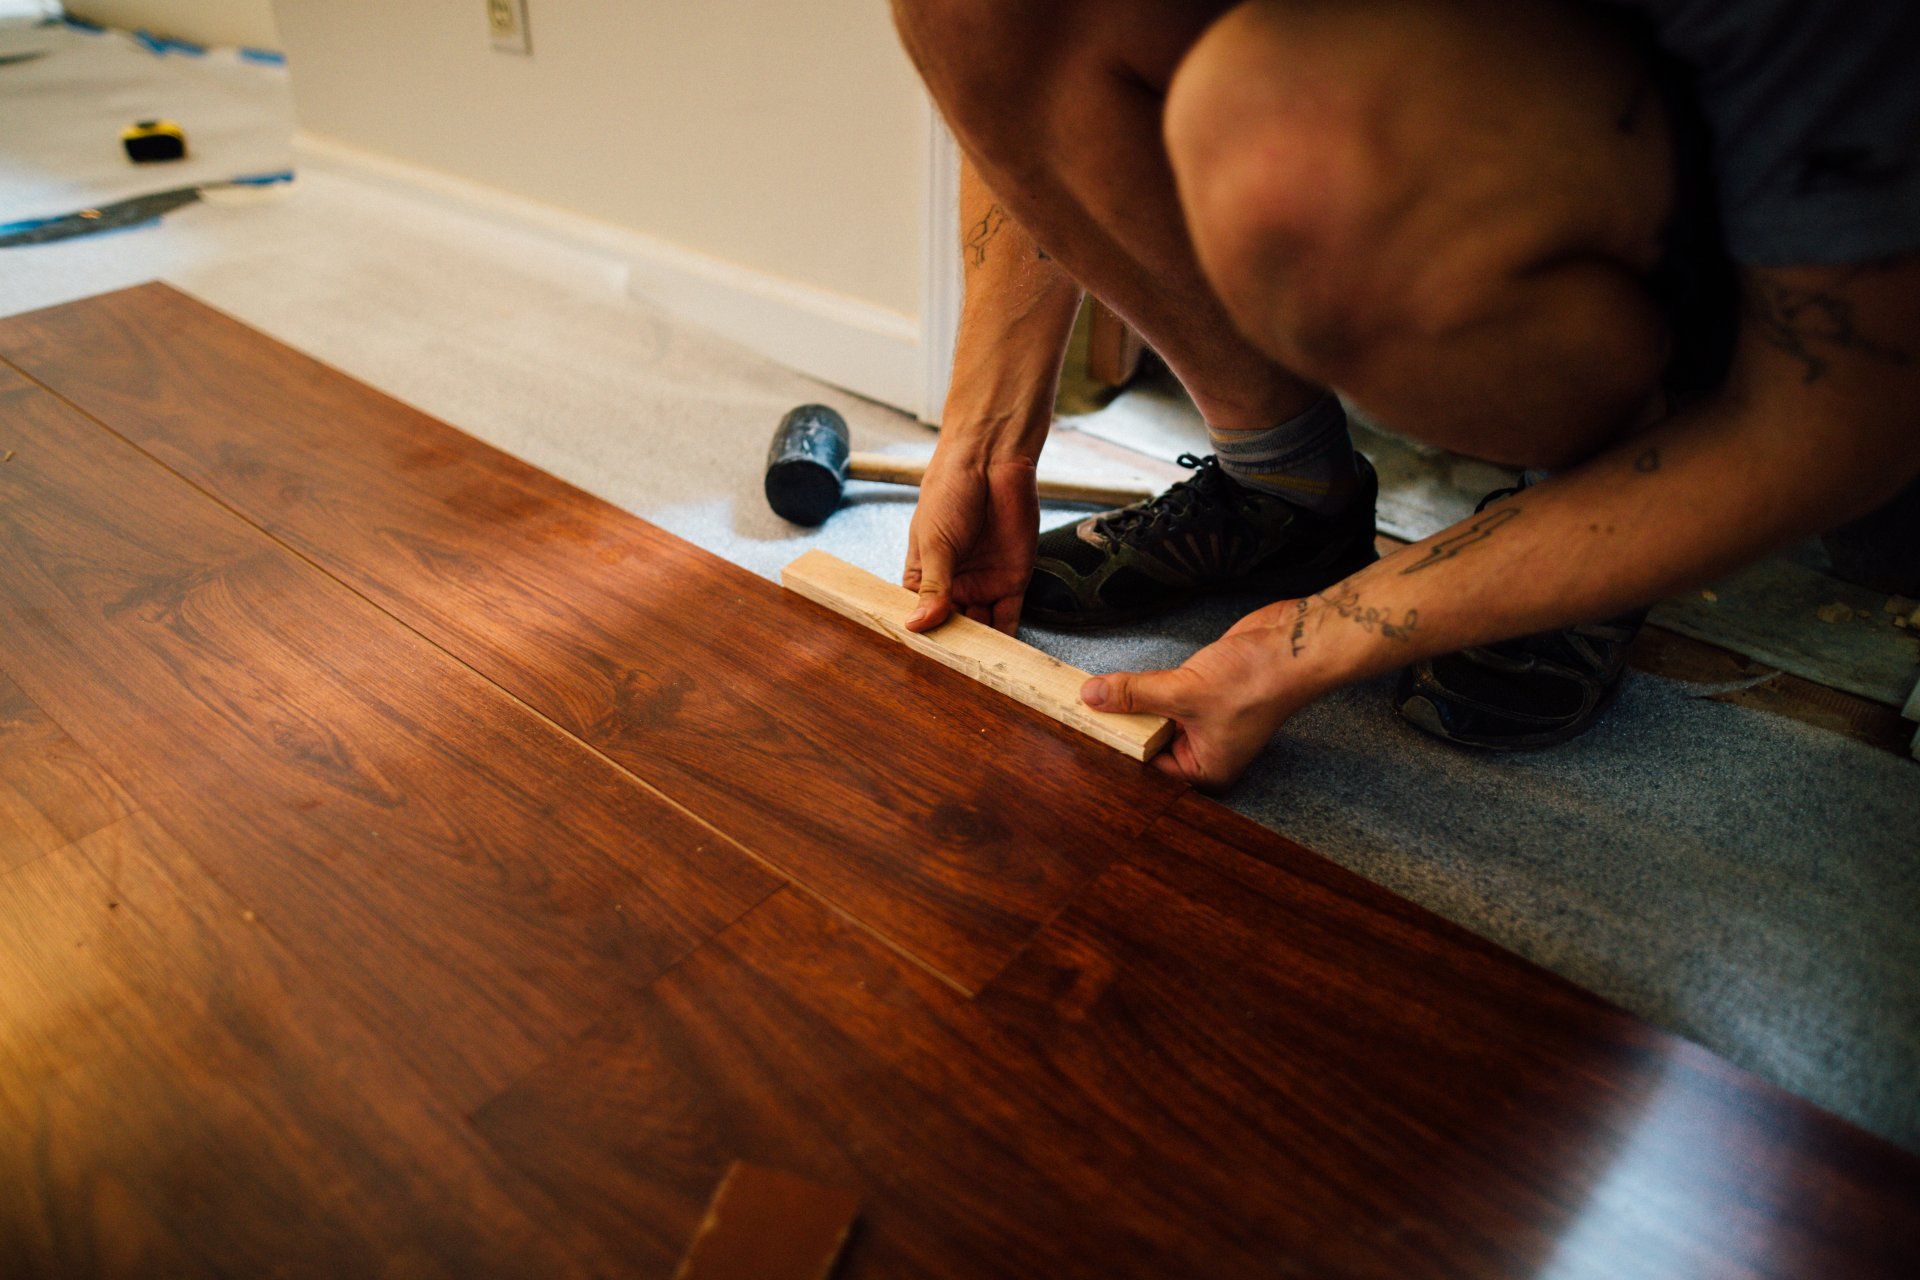 A man installing laminate flooring in a room.